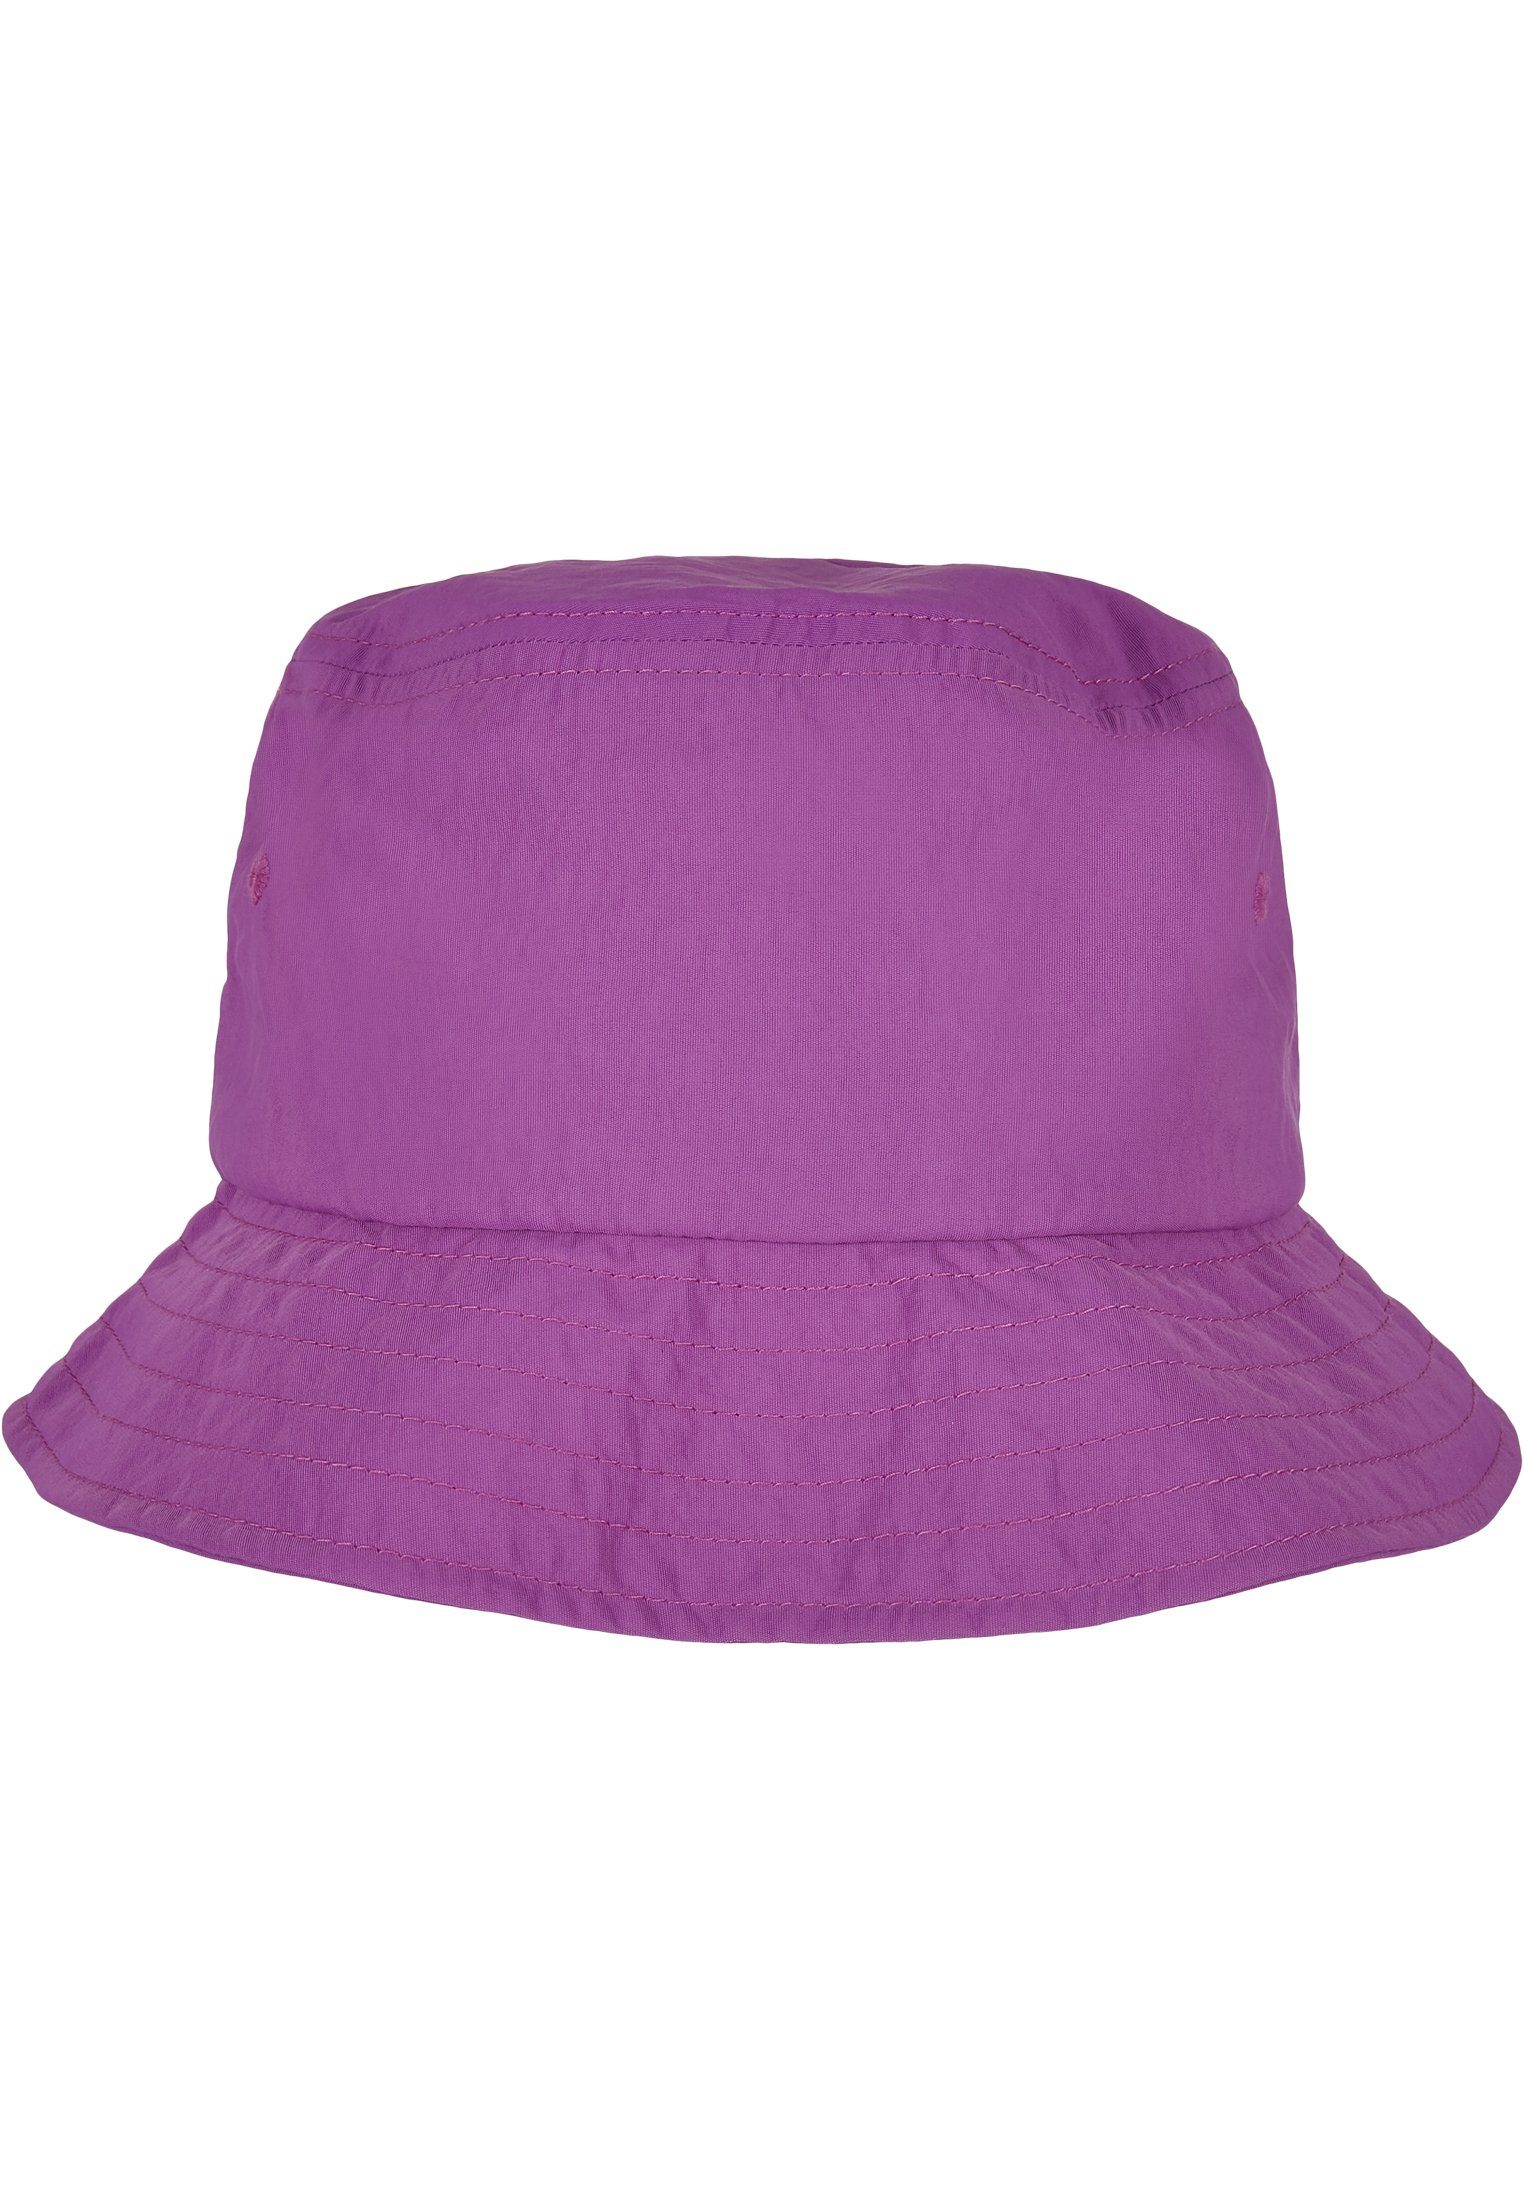 Accessoires Bucket Water Flexfit Flex Cap Repellent Hat